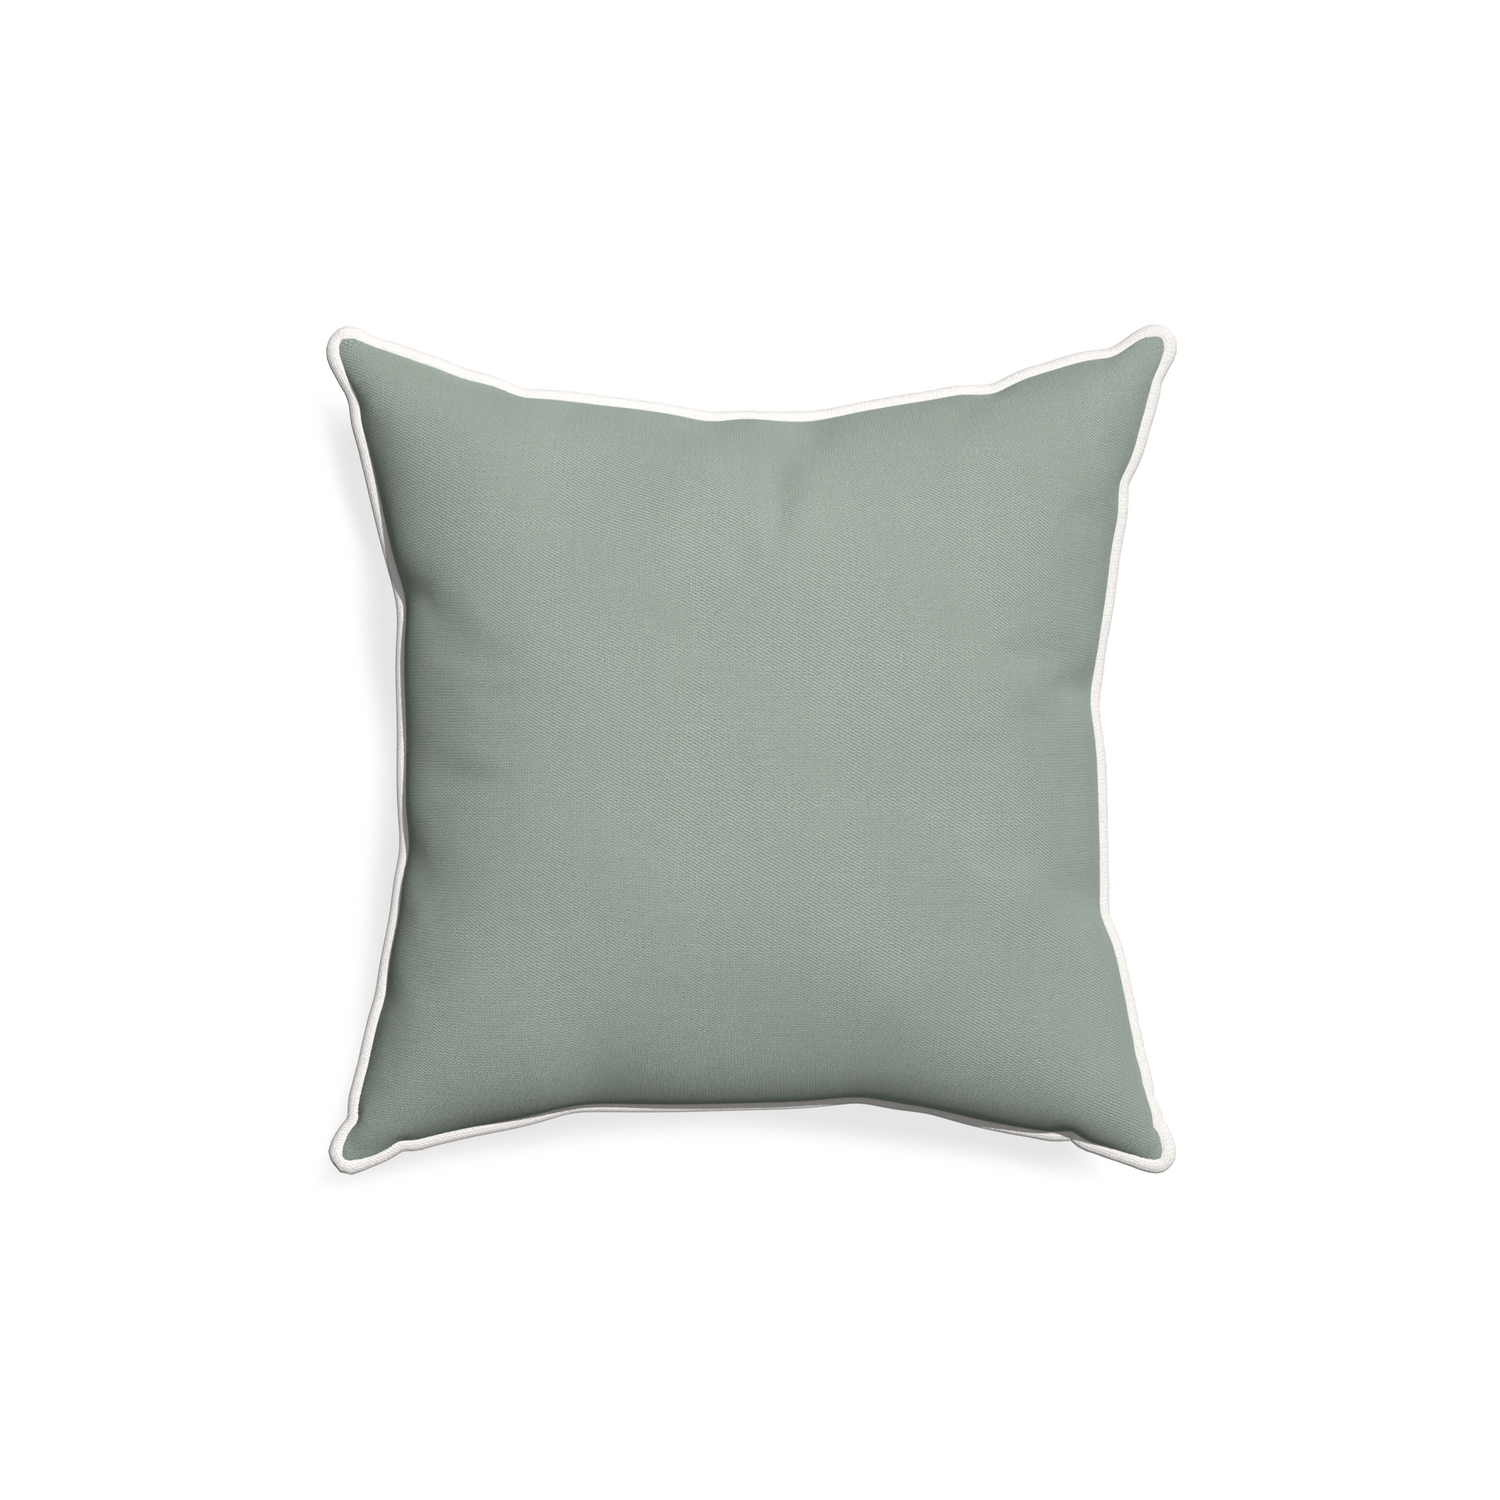 Personalized Monogram Pillow Cover in White, Monogram Lumbar